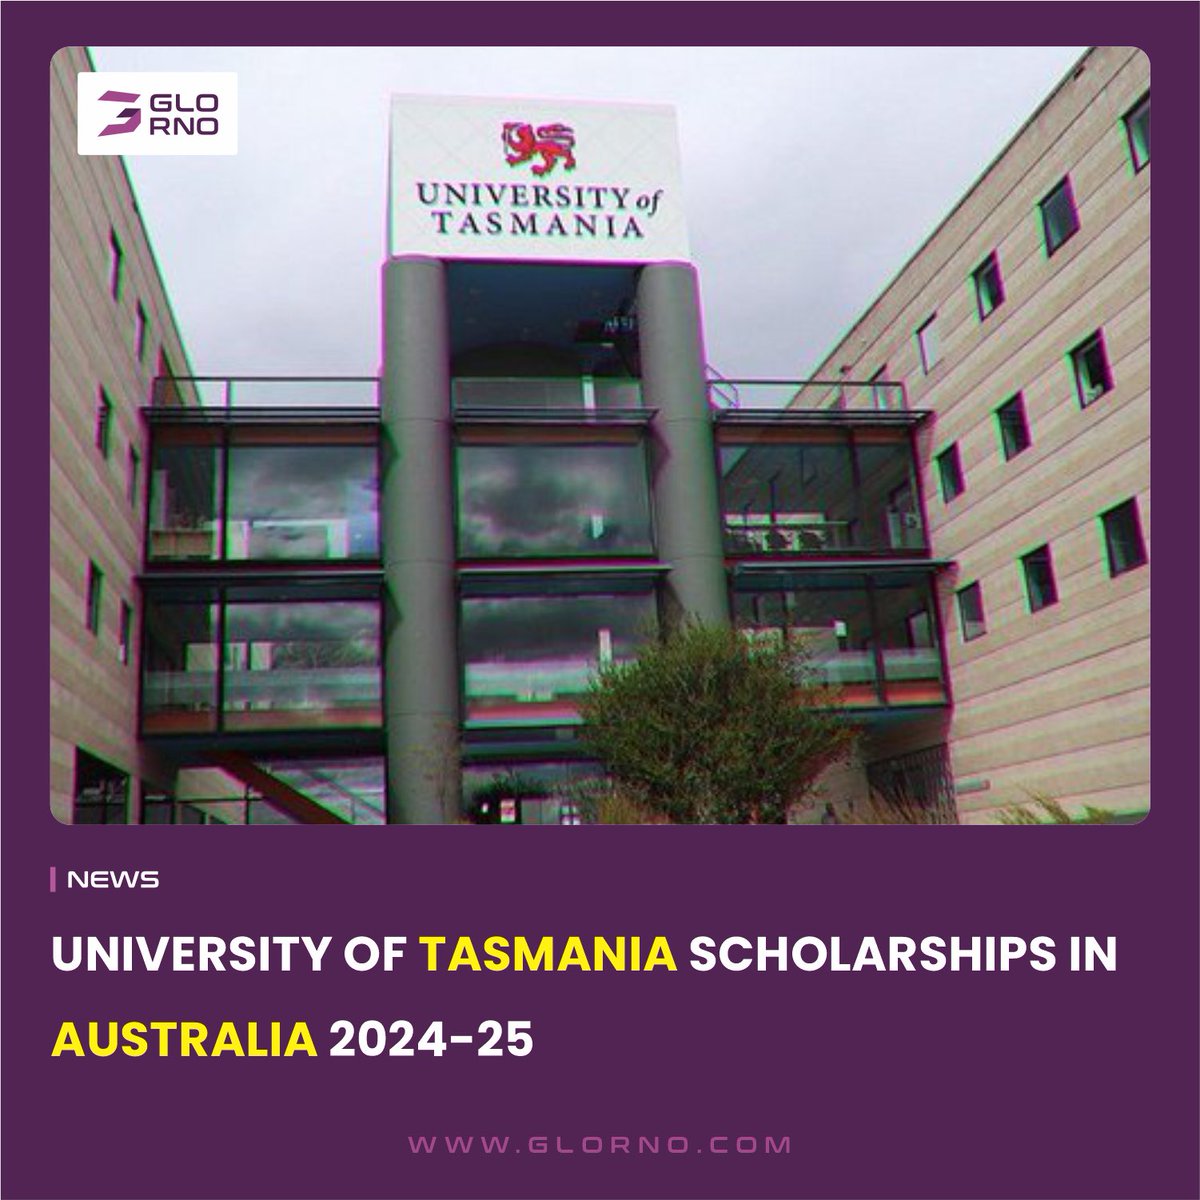 Unlock your potential! The University of Tasmania Scholarships in Australia for 2024-25 are now open. Apply now! glorno.com/index.php/2024…

 #UniversityofTasmania #Scholarships2024 #StudyinAustralia